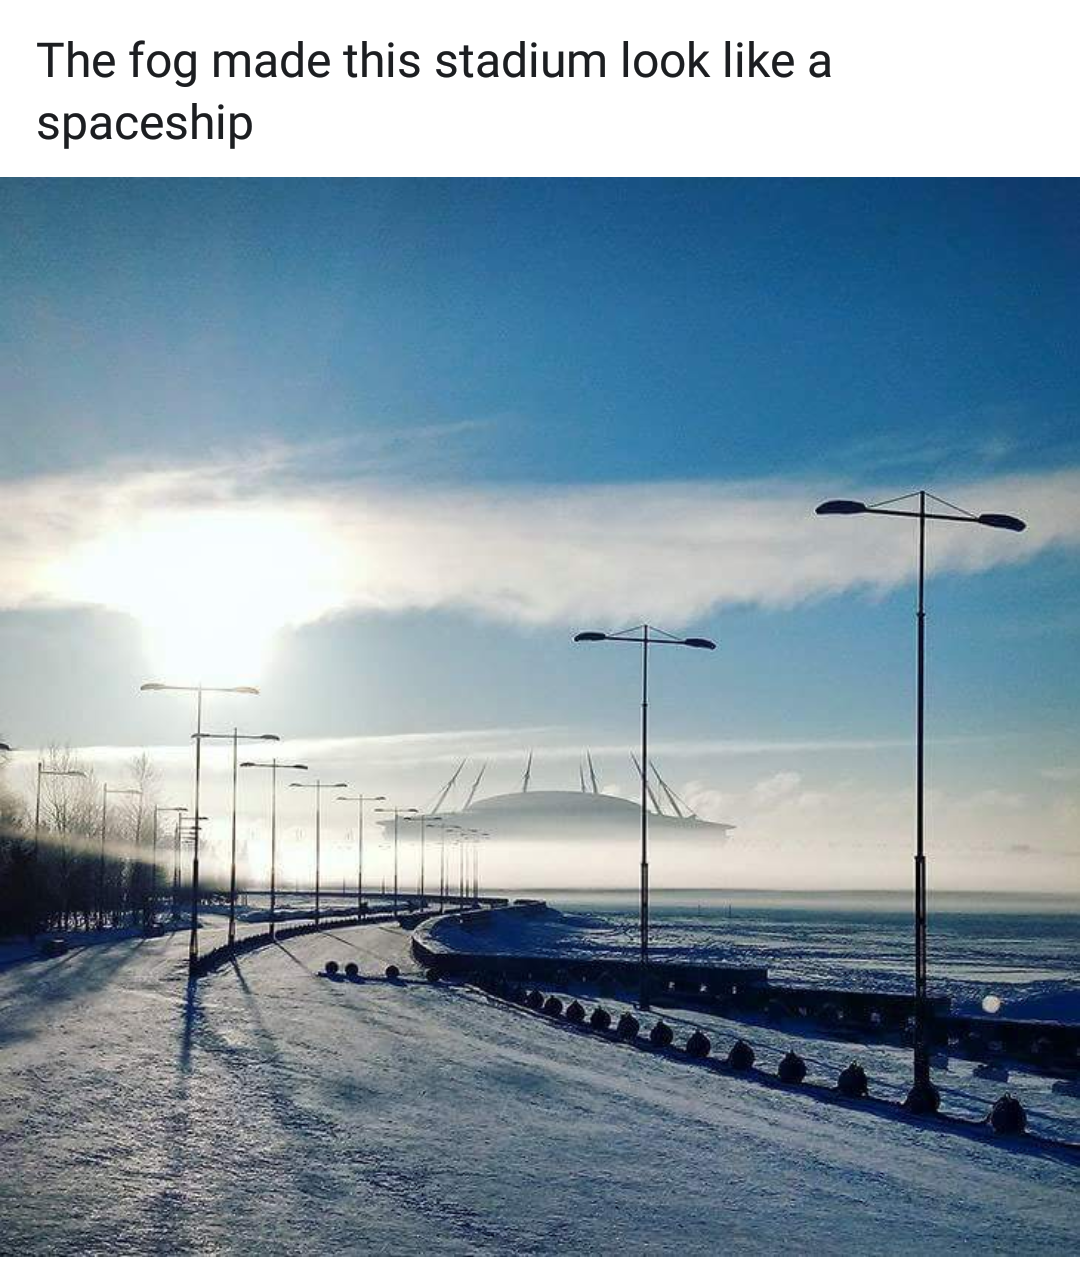 The fog made this stadium look a spaceship